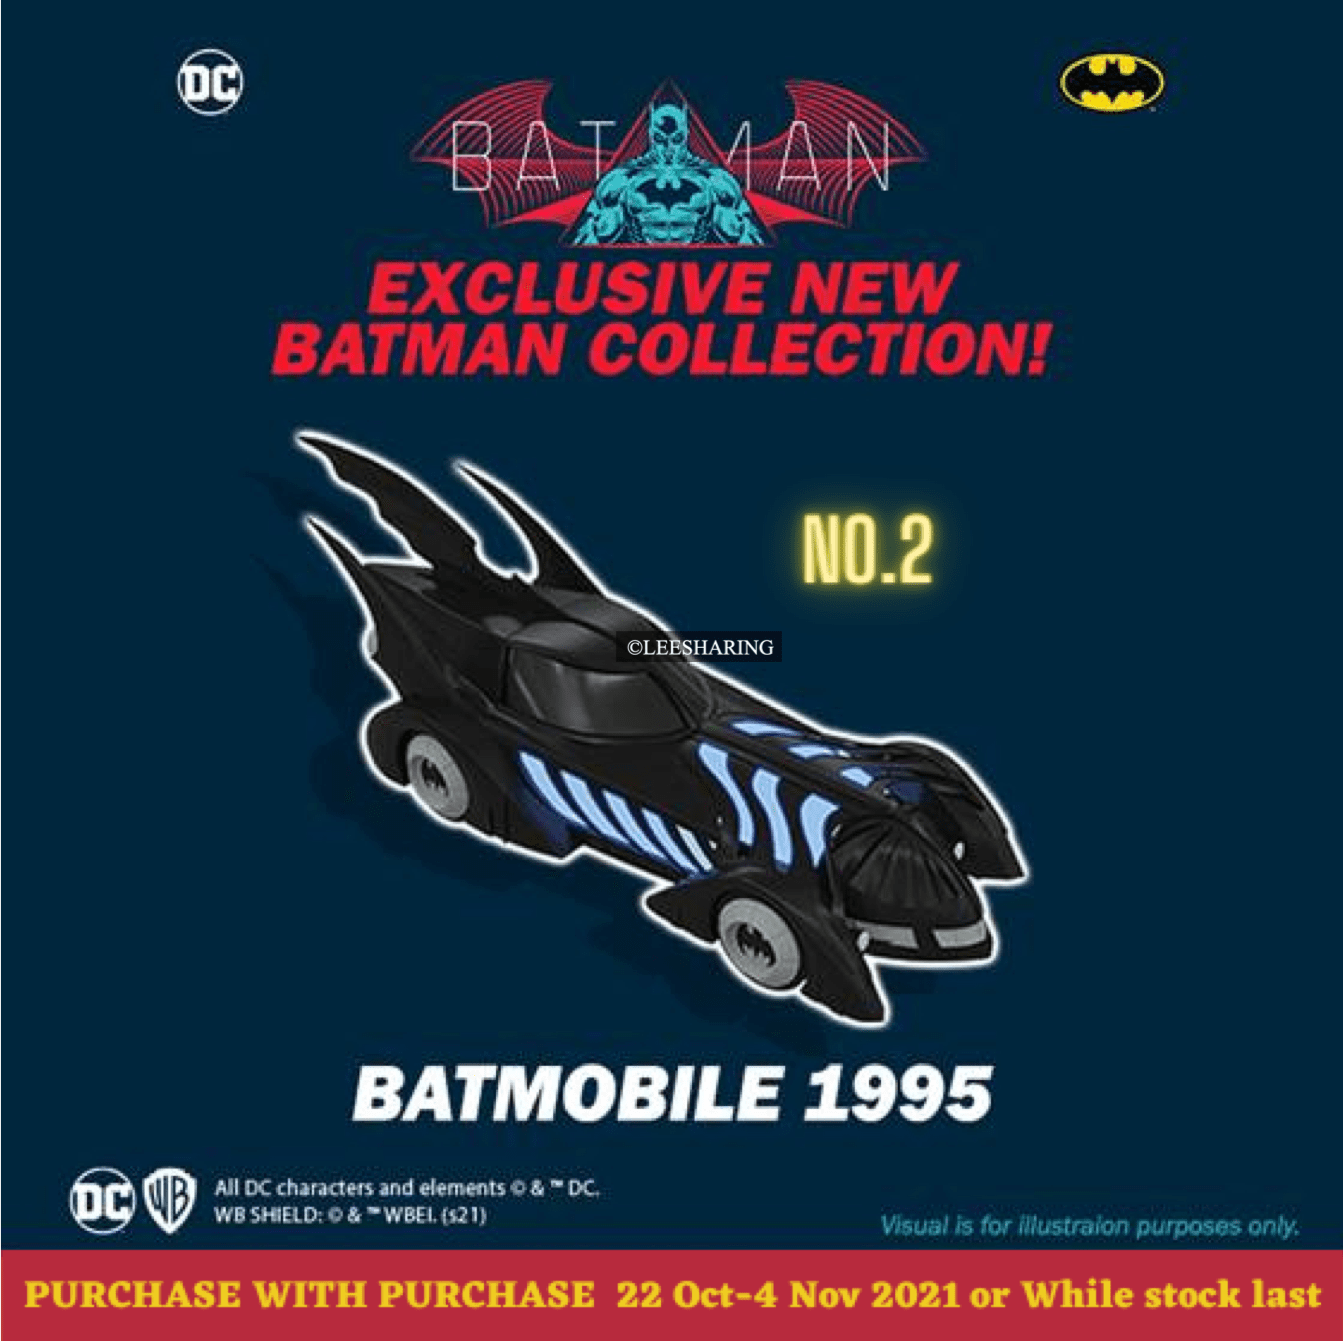 Batman 2021 caltex Koleksi Batmobile